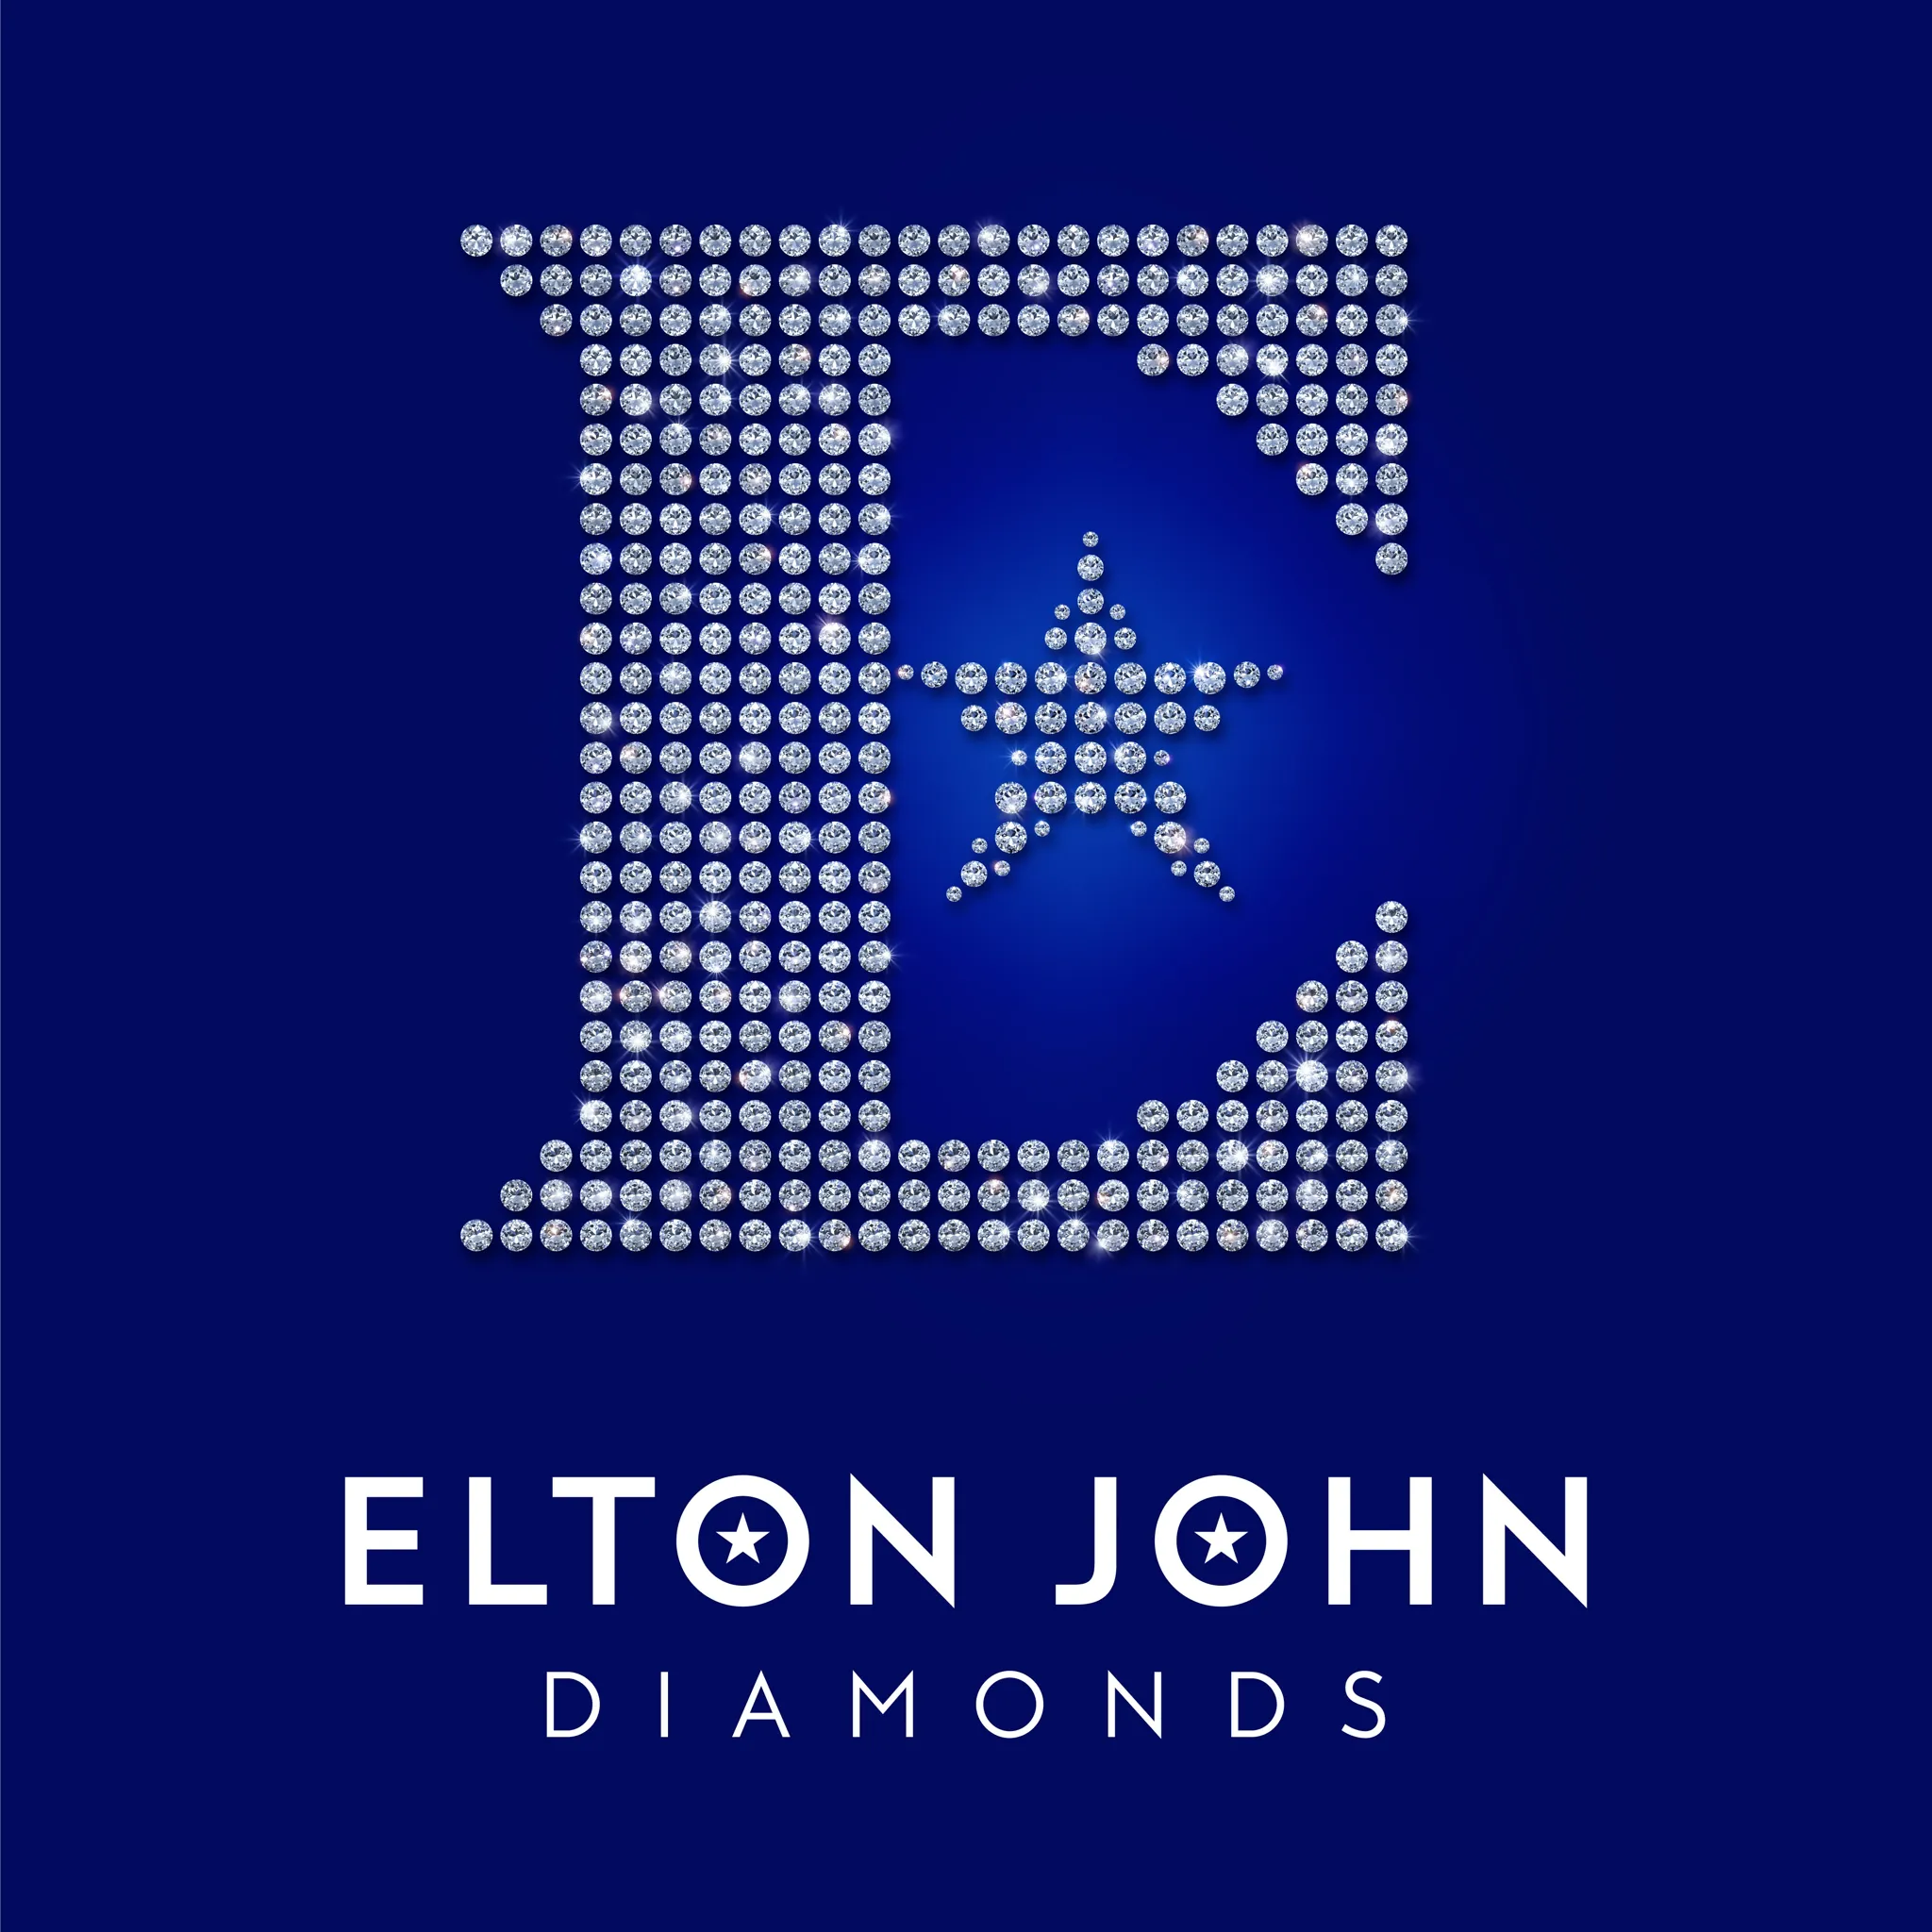 Elton John - Diamonds artwork